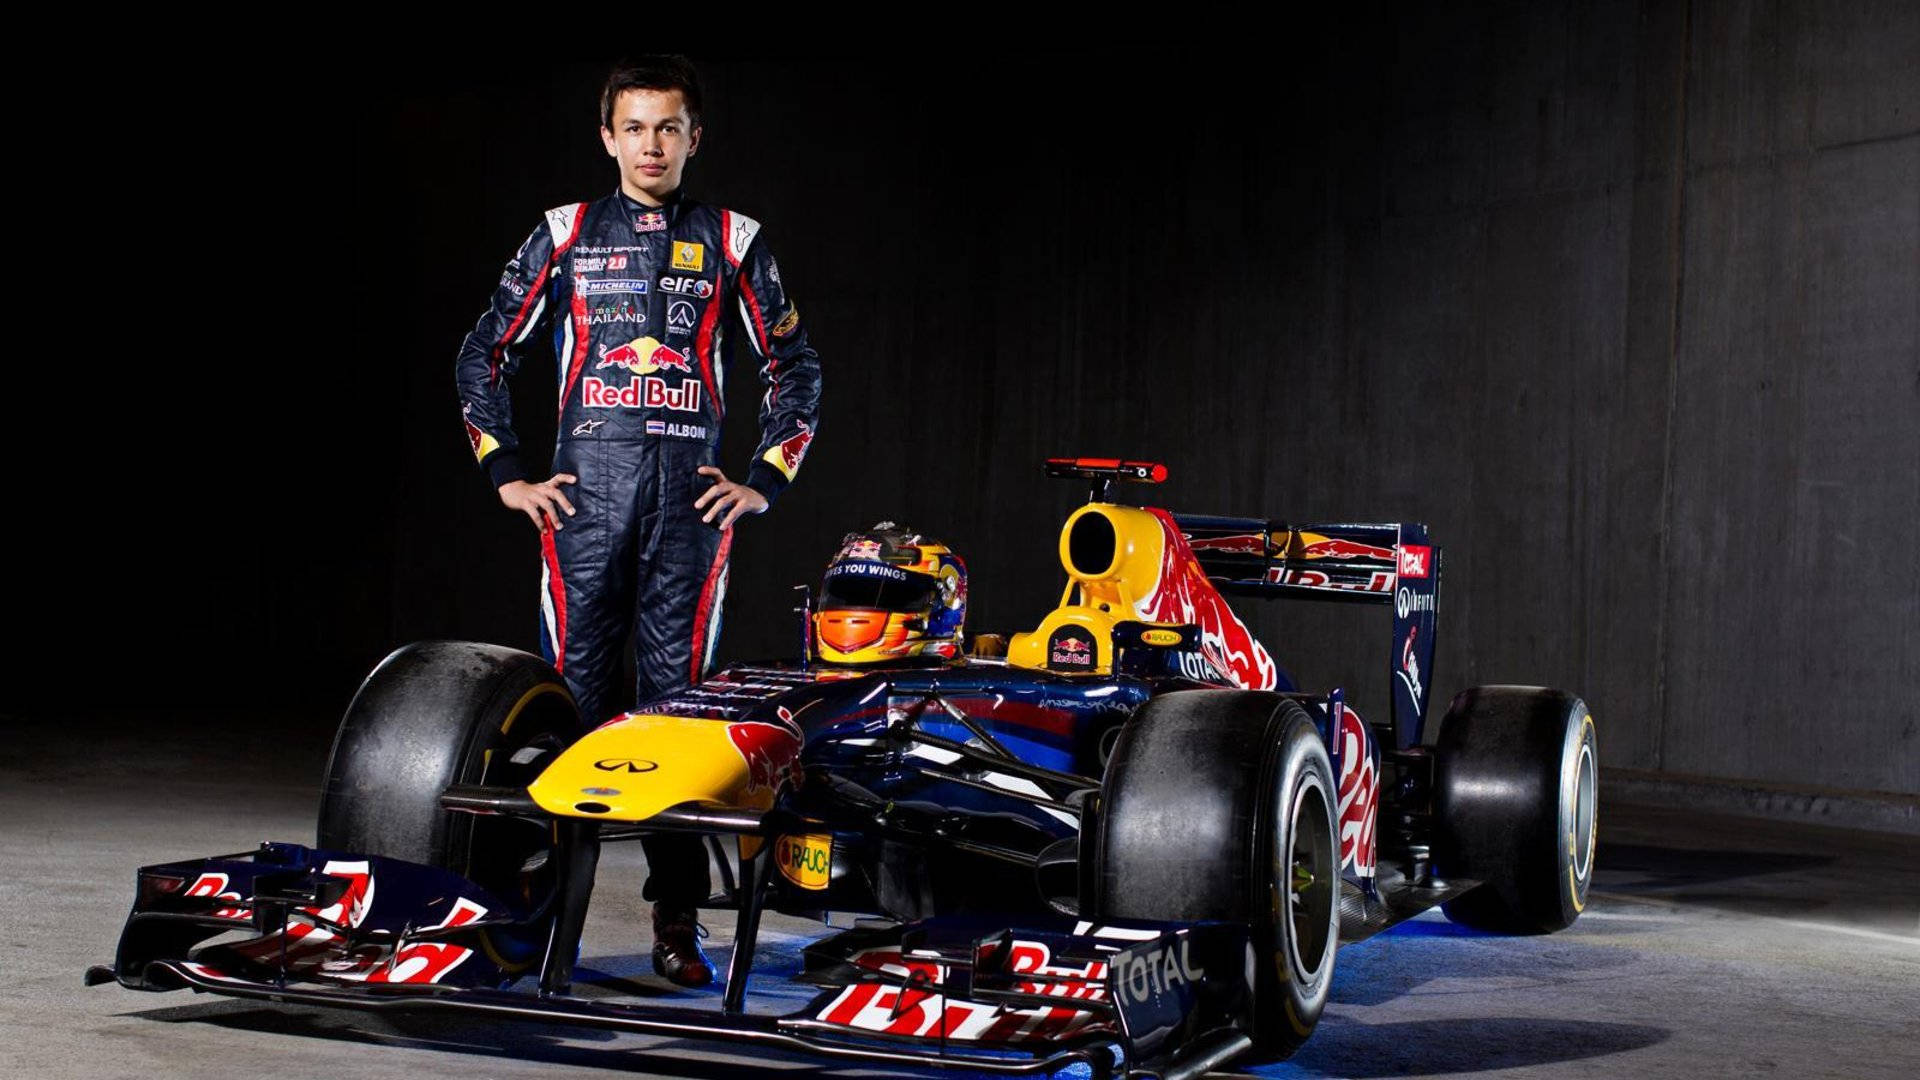 Caption: Alexander Albon in Red Bull Racing Gear Wallpaper